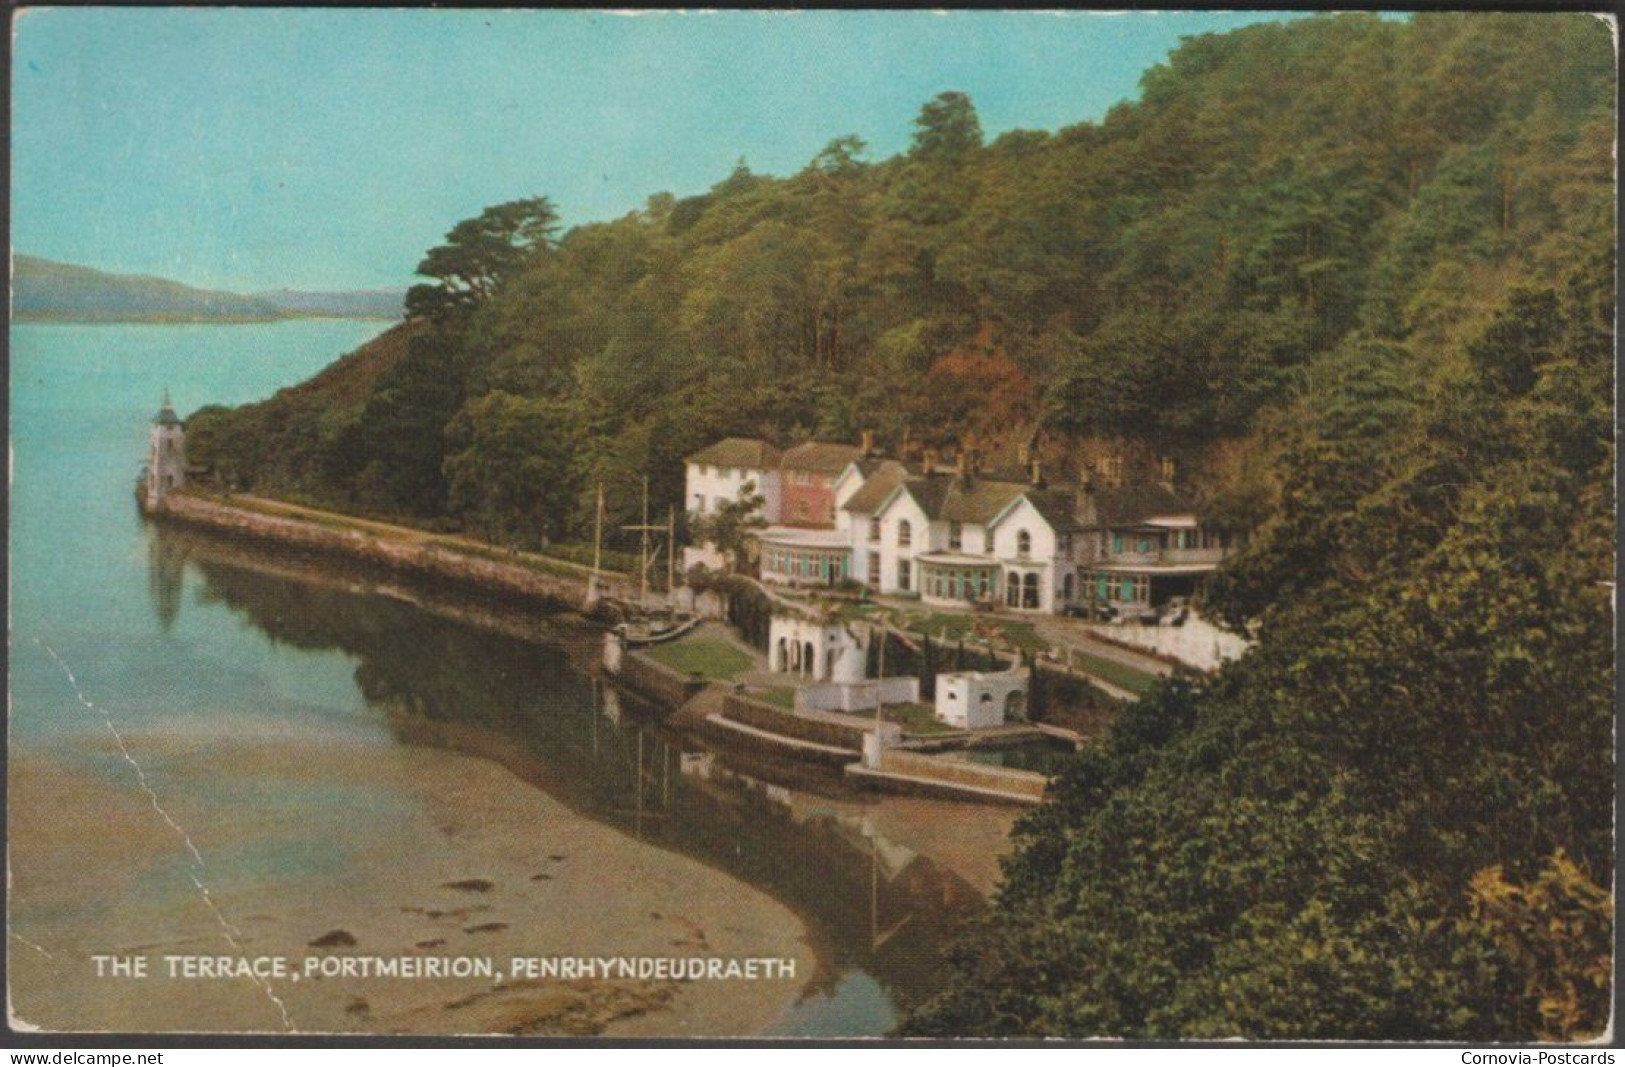 The Terrace, Portmeirion, Penrhyndeudraeth, 1970 - Salmon Postcard - Merionethshire